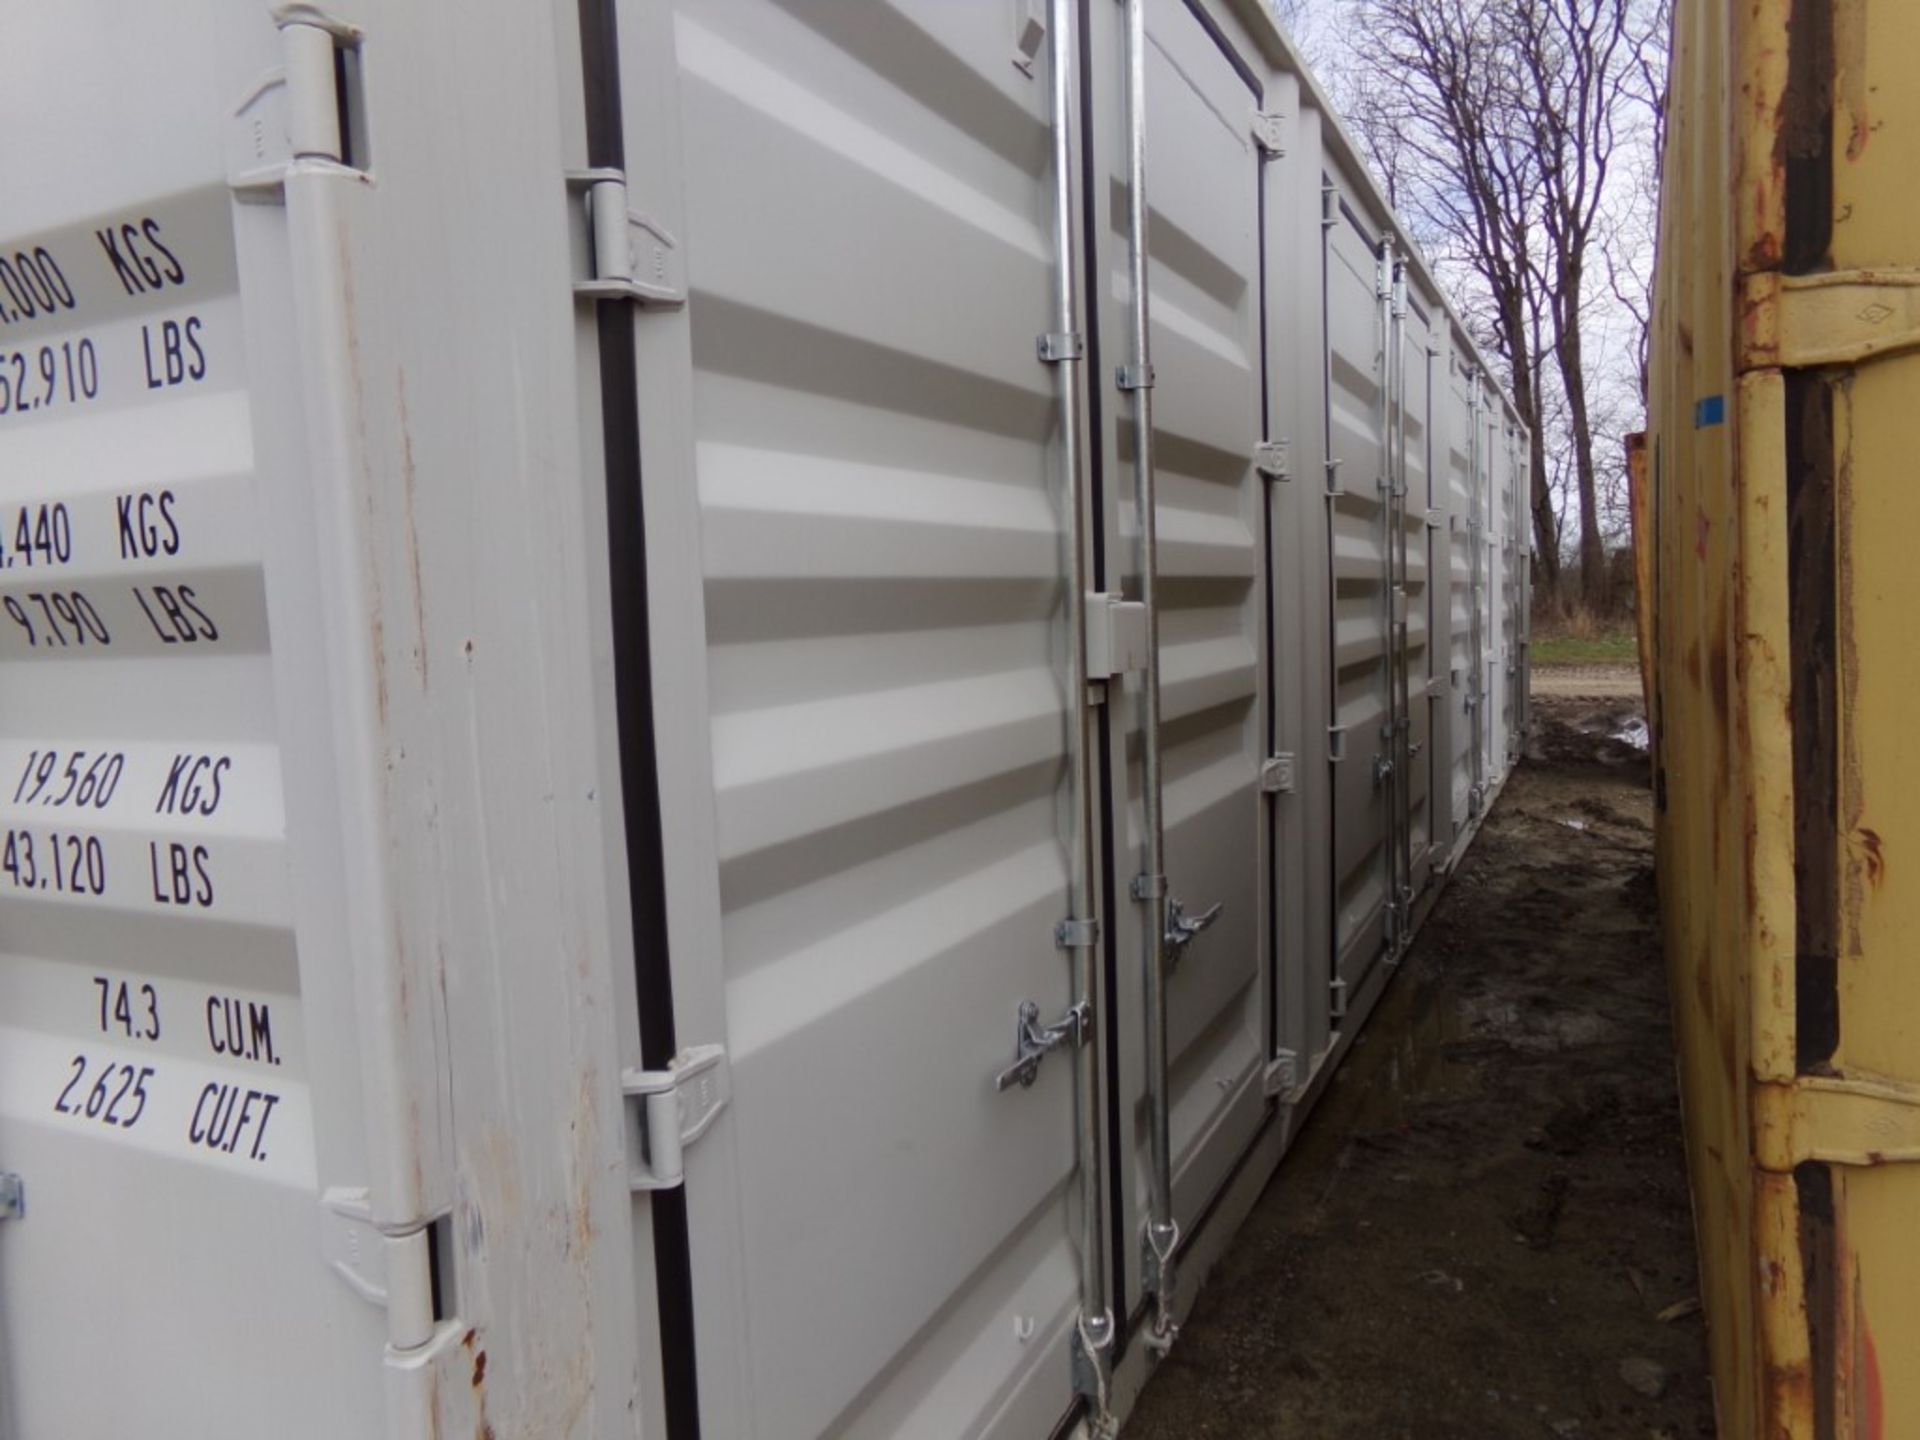 New 40' Off White Storage Container with Barn Doors in 1 End, Cont. # LYGU4130134 - Bild 2 aus 5